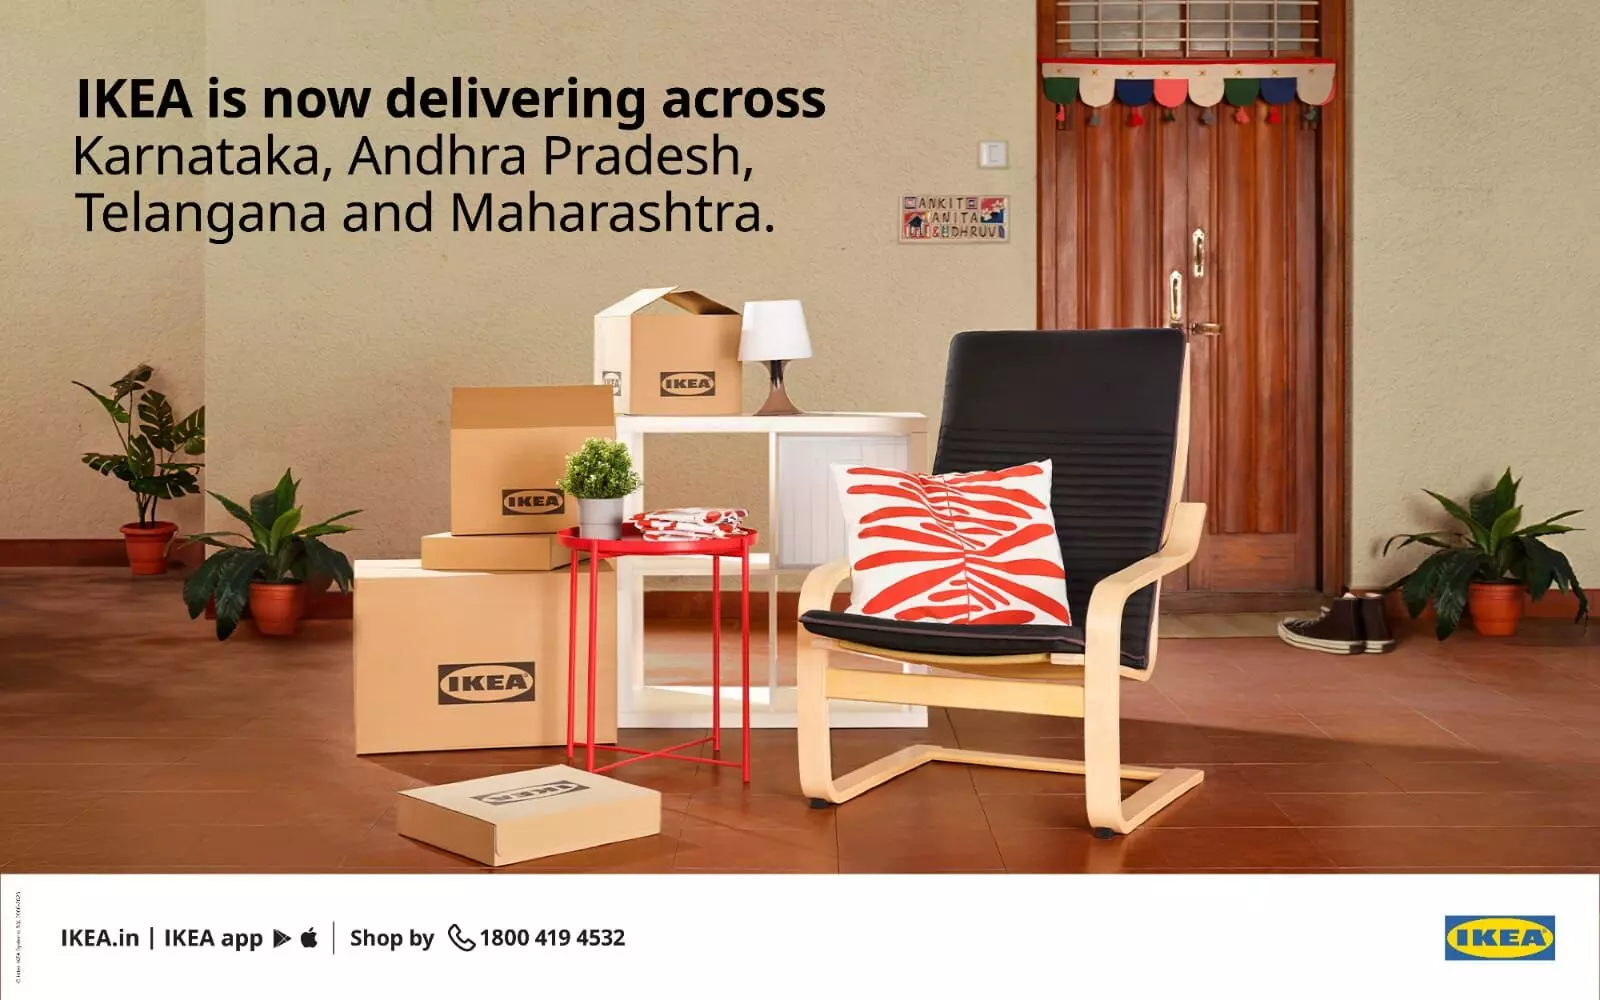 IKEA announces doorstep deliveries in 62 new markets across Telangana, Andhra Pradesh, Maharashtra, Karnataka